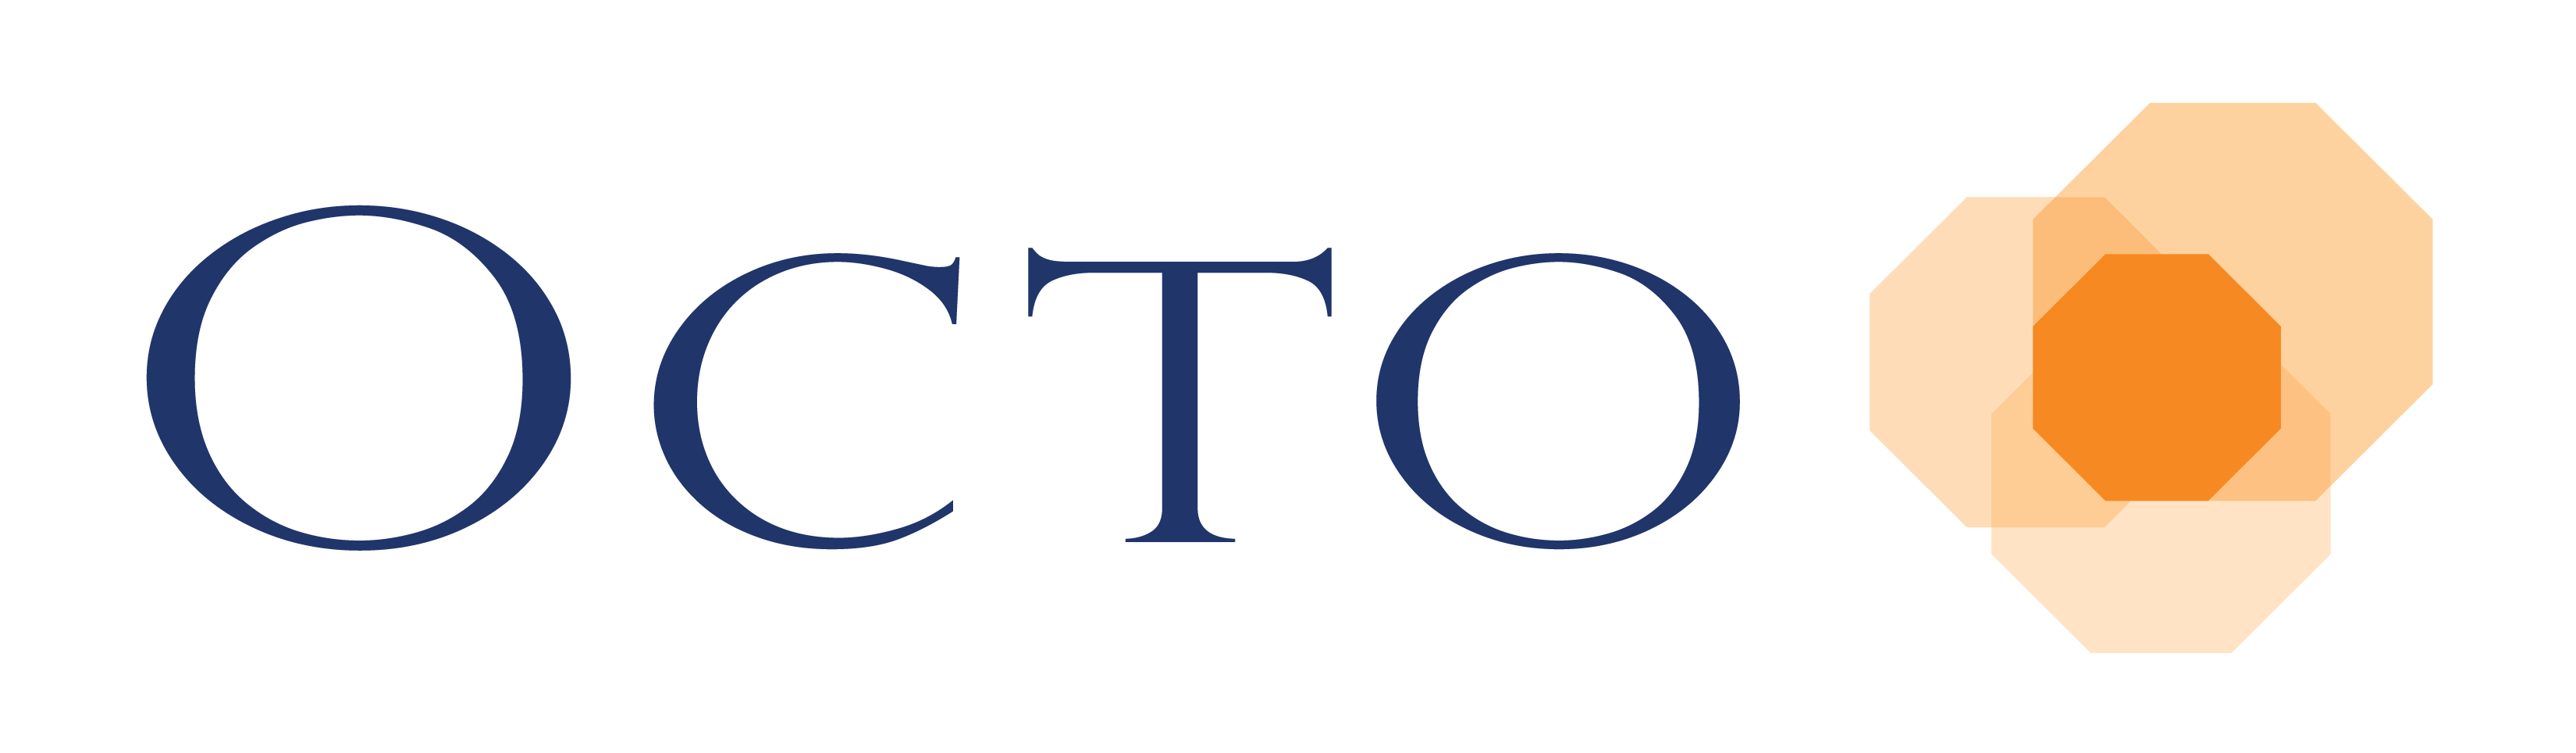 OCTO Technology Logo photo - 1